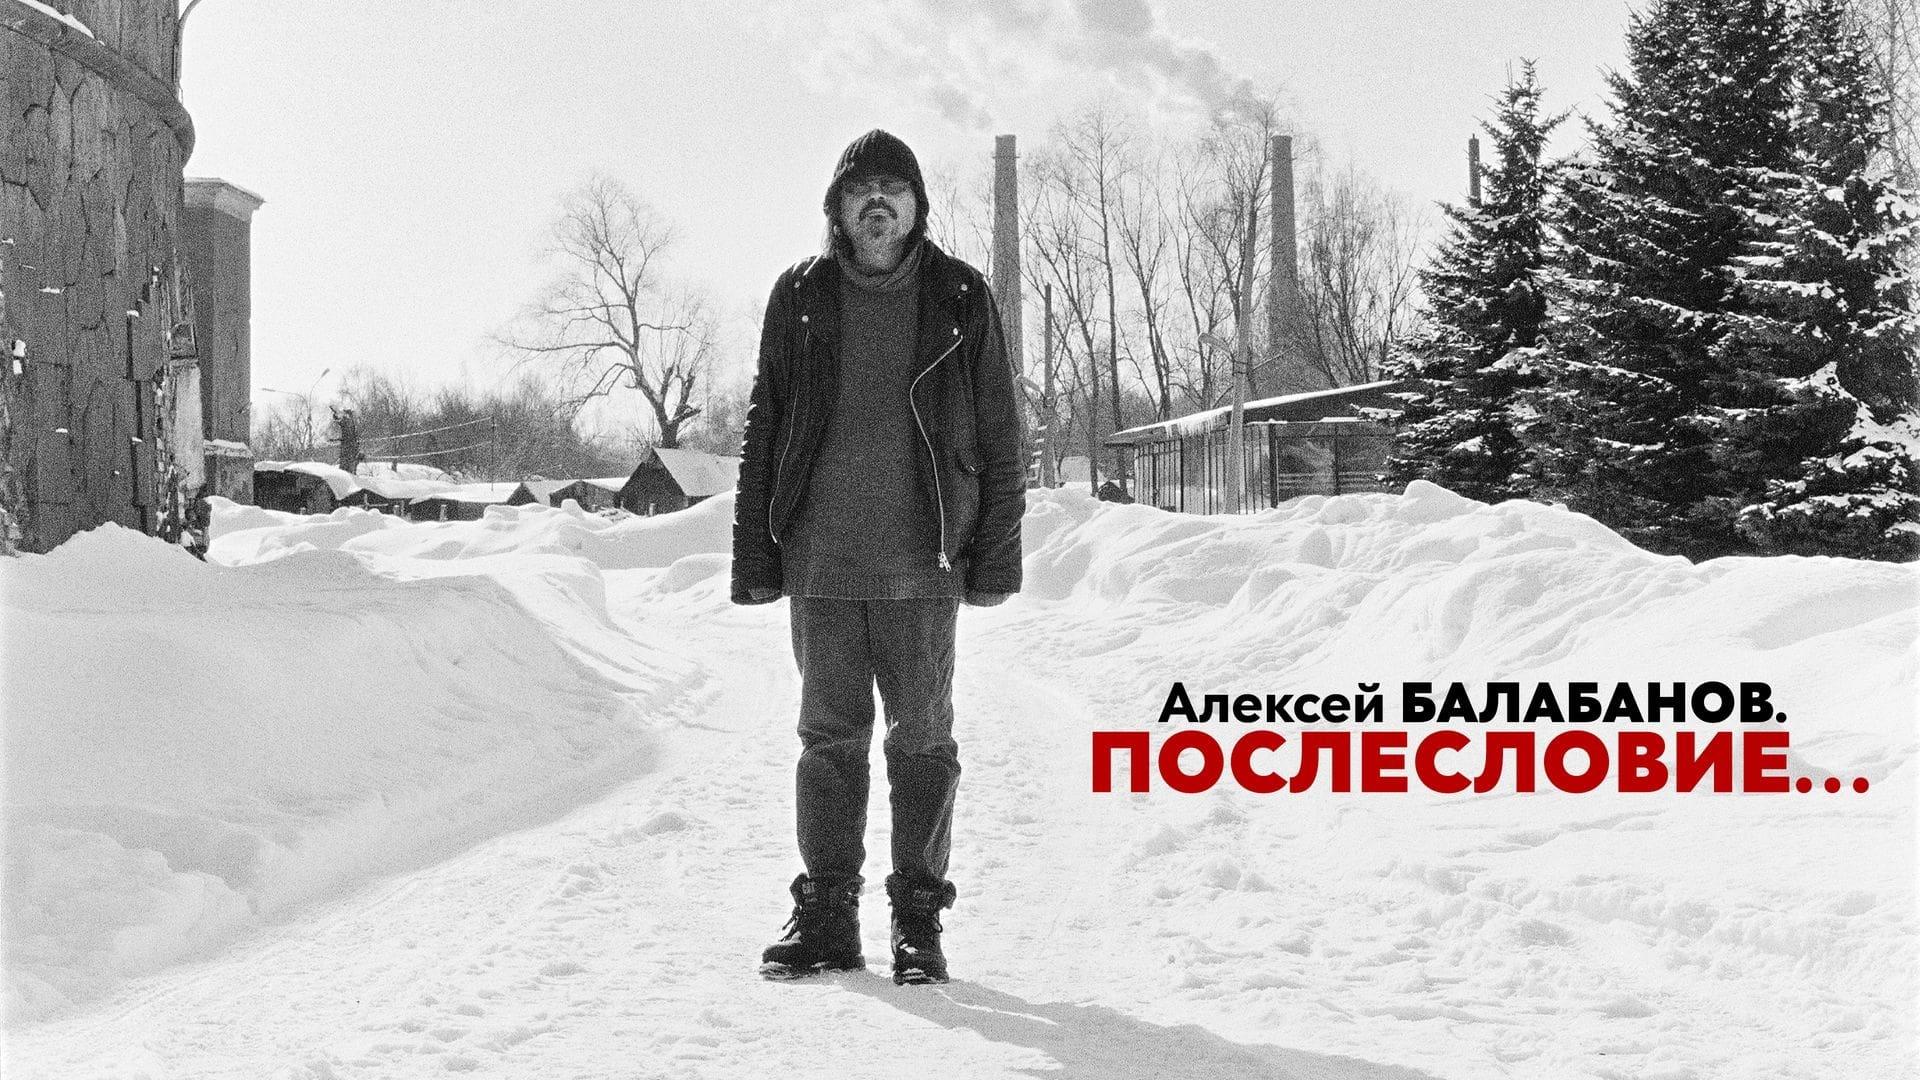 Aleksey Balabanov backdrop